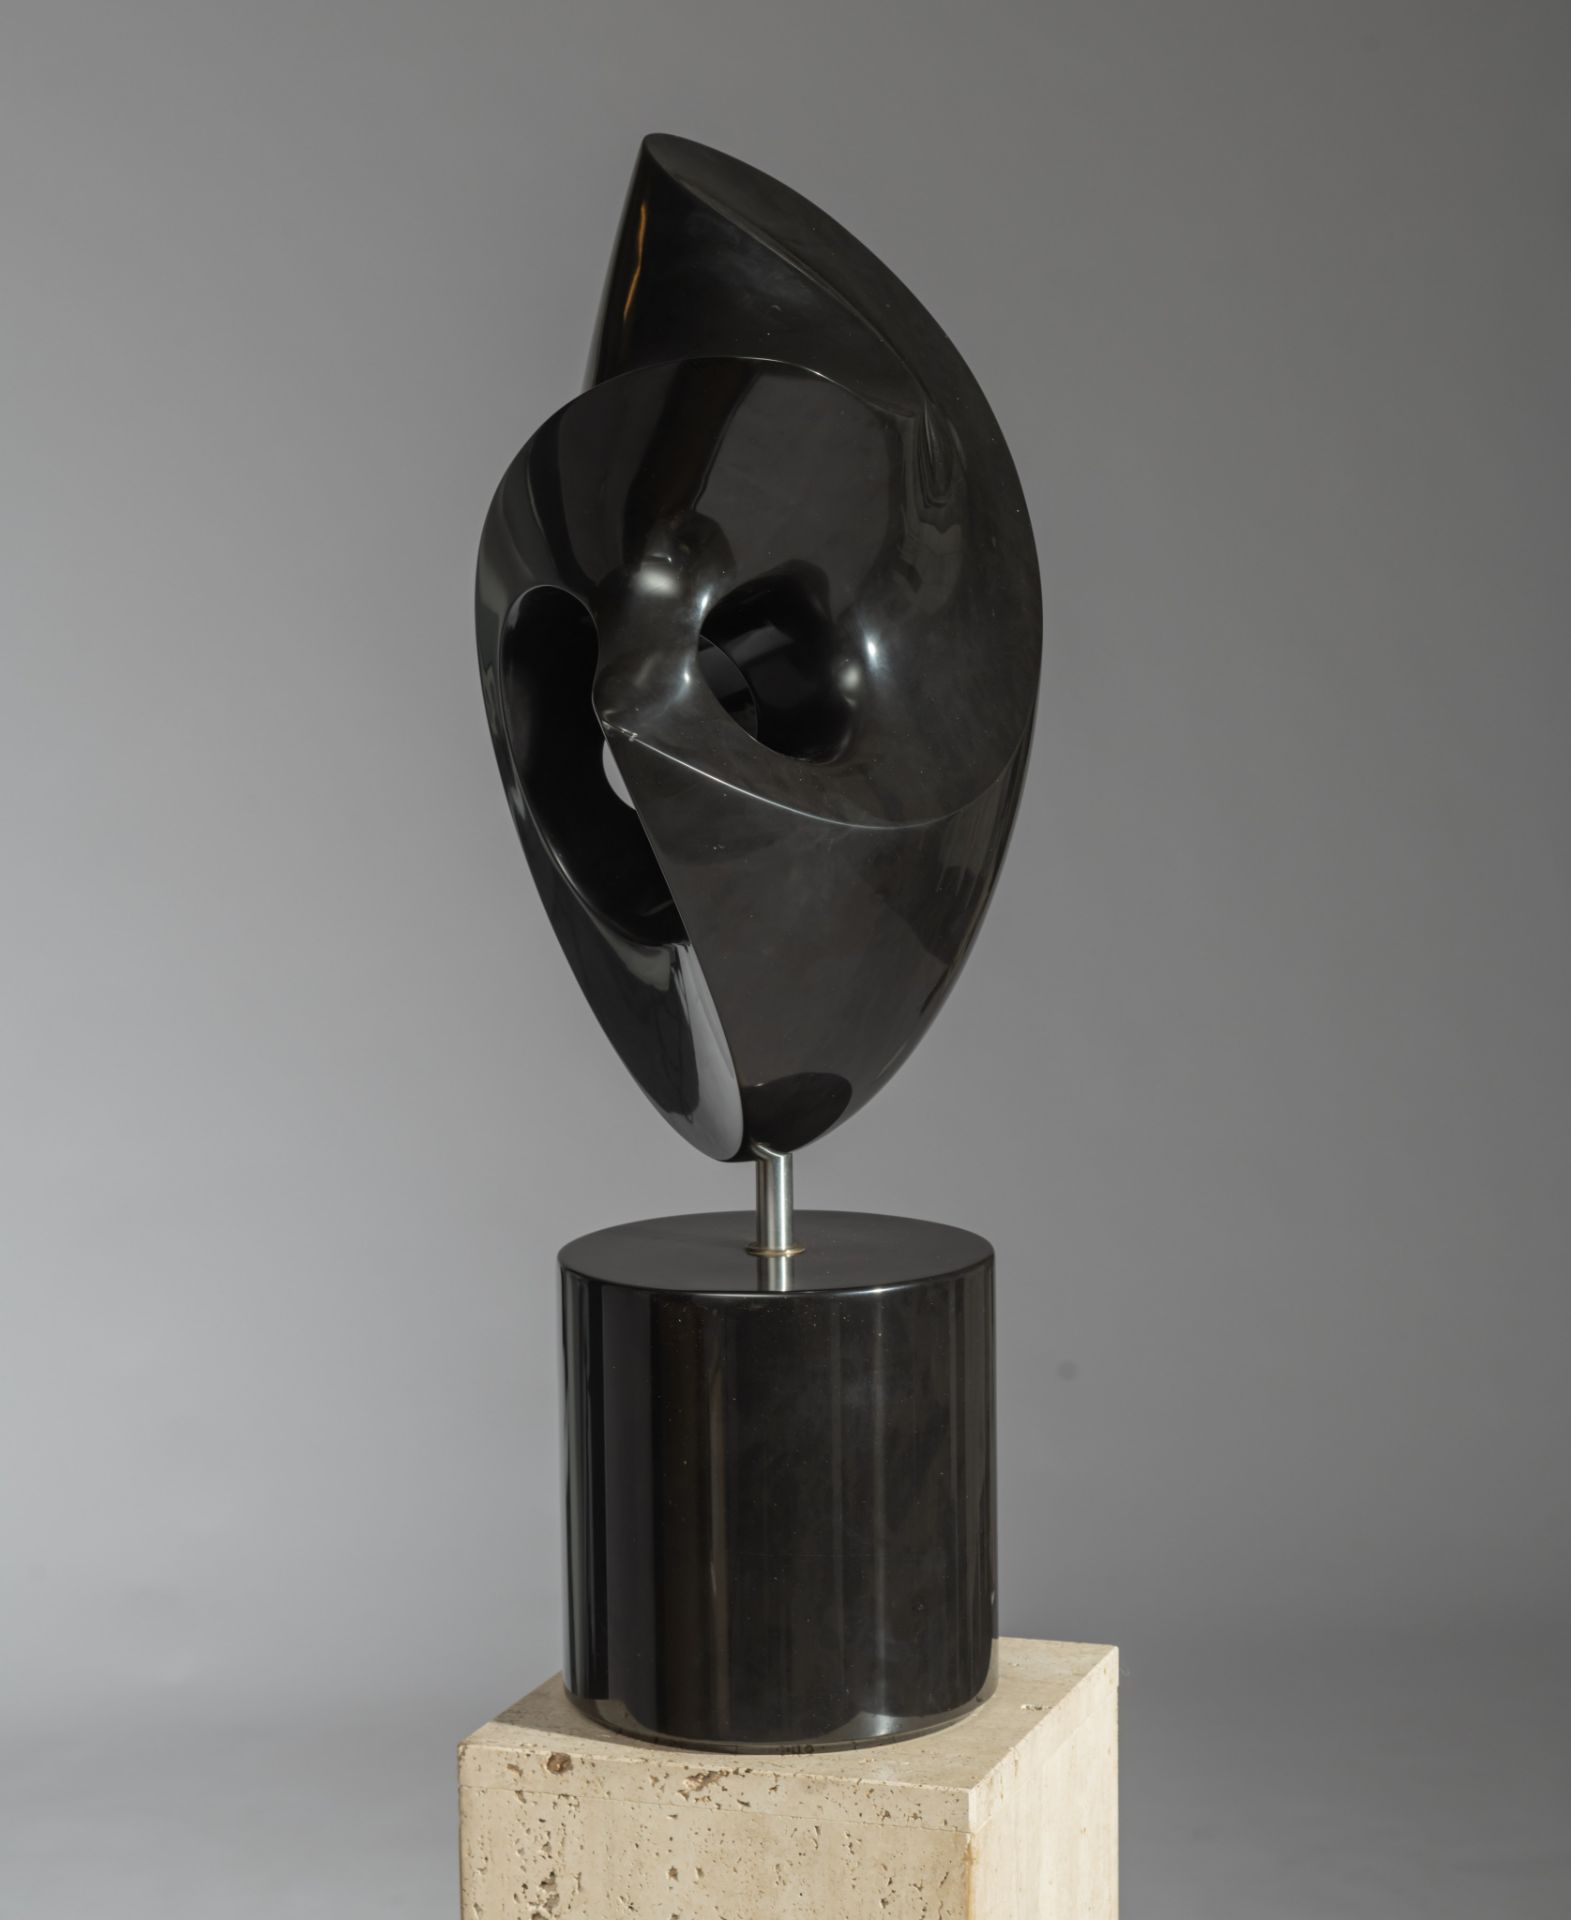 Jeanine Behaeghel (1940-1993), abstract sculpture, 1988, noir Belge marble on a travertine pedestal, - Image 7 of 18